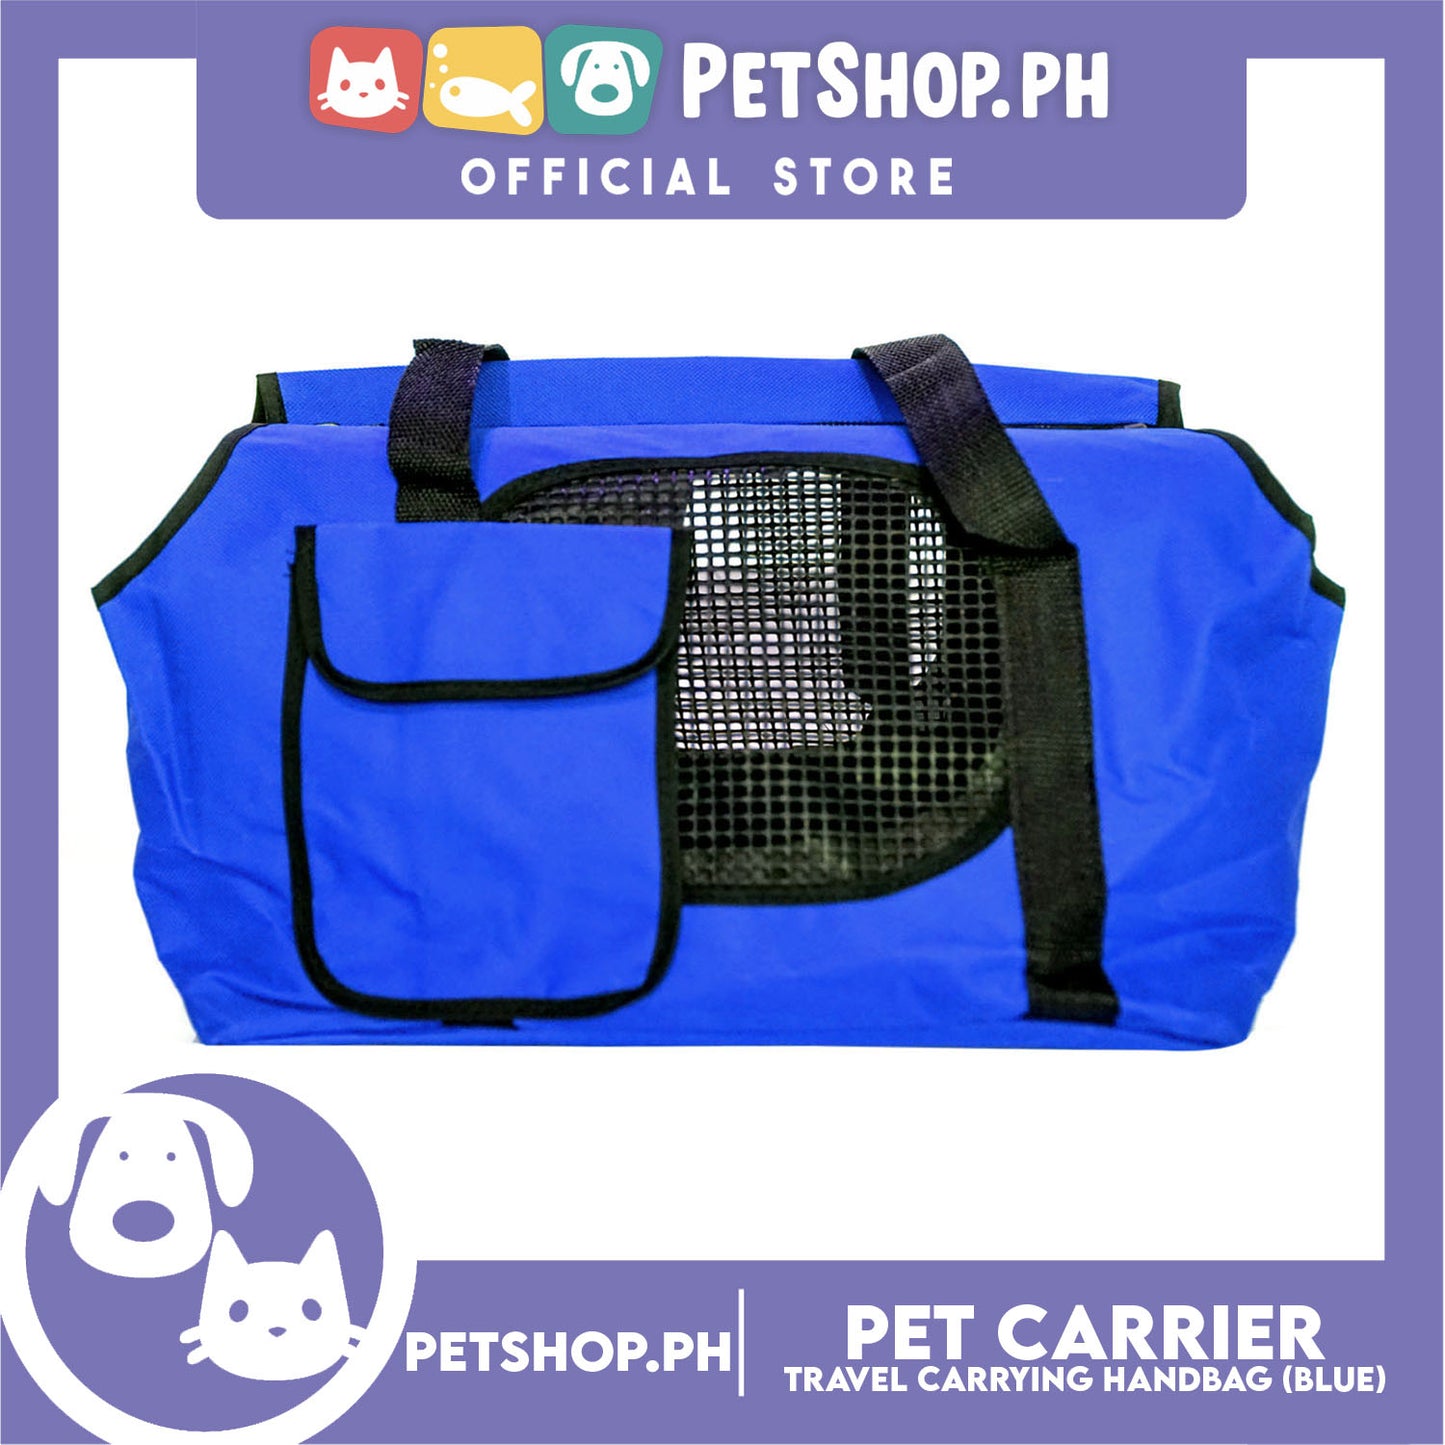 Pet Carrier Summer Travel Carrying Handbag, Shoulder Bag L36 x W18 x H26 Medium (Blue)